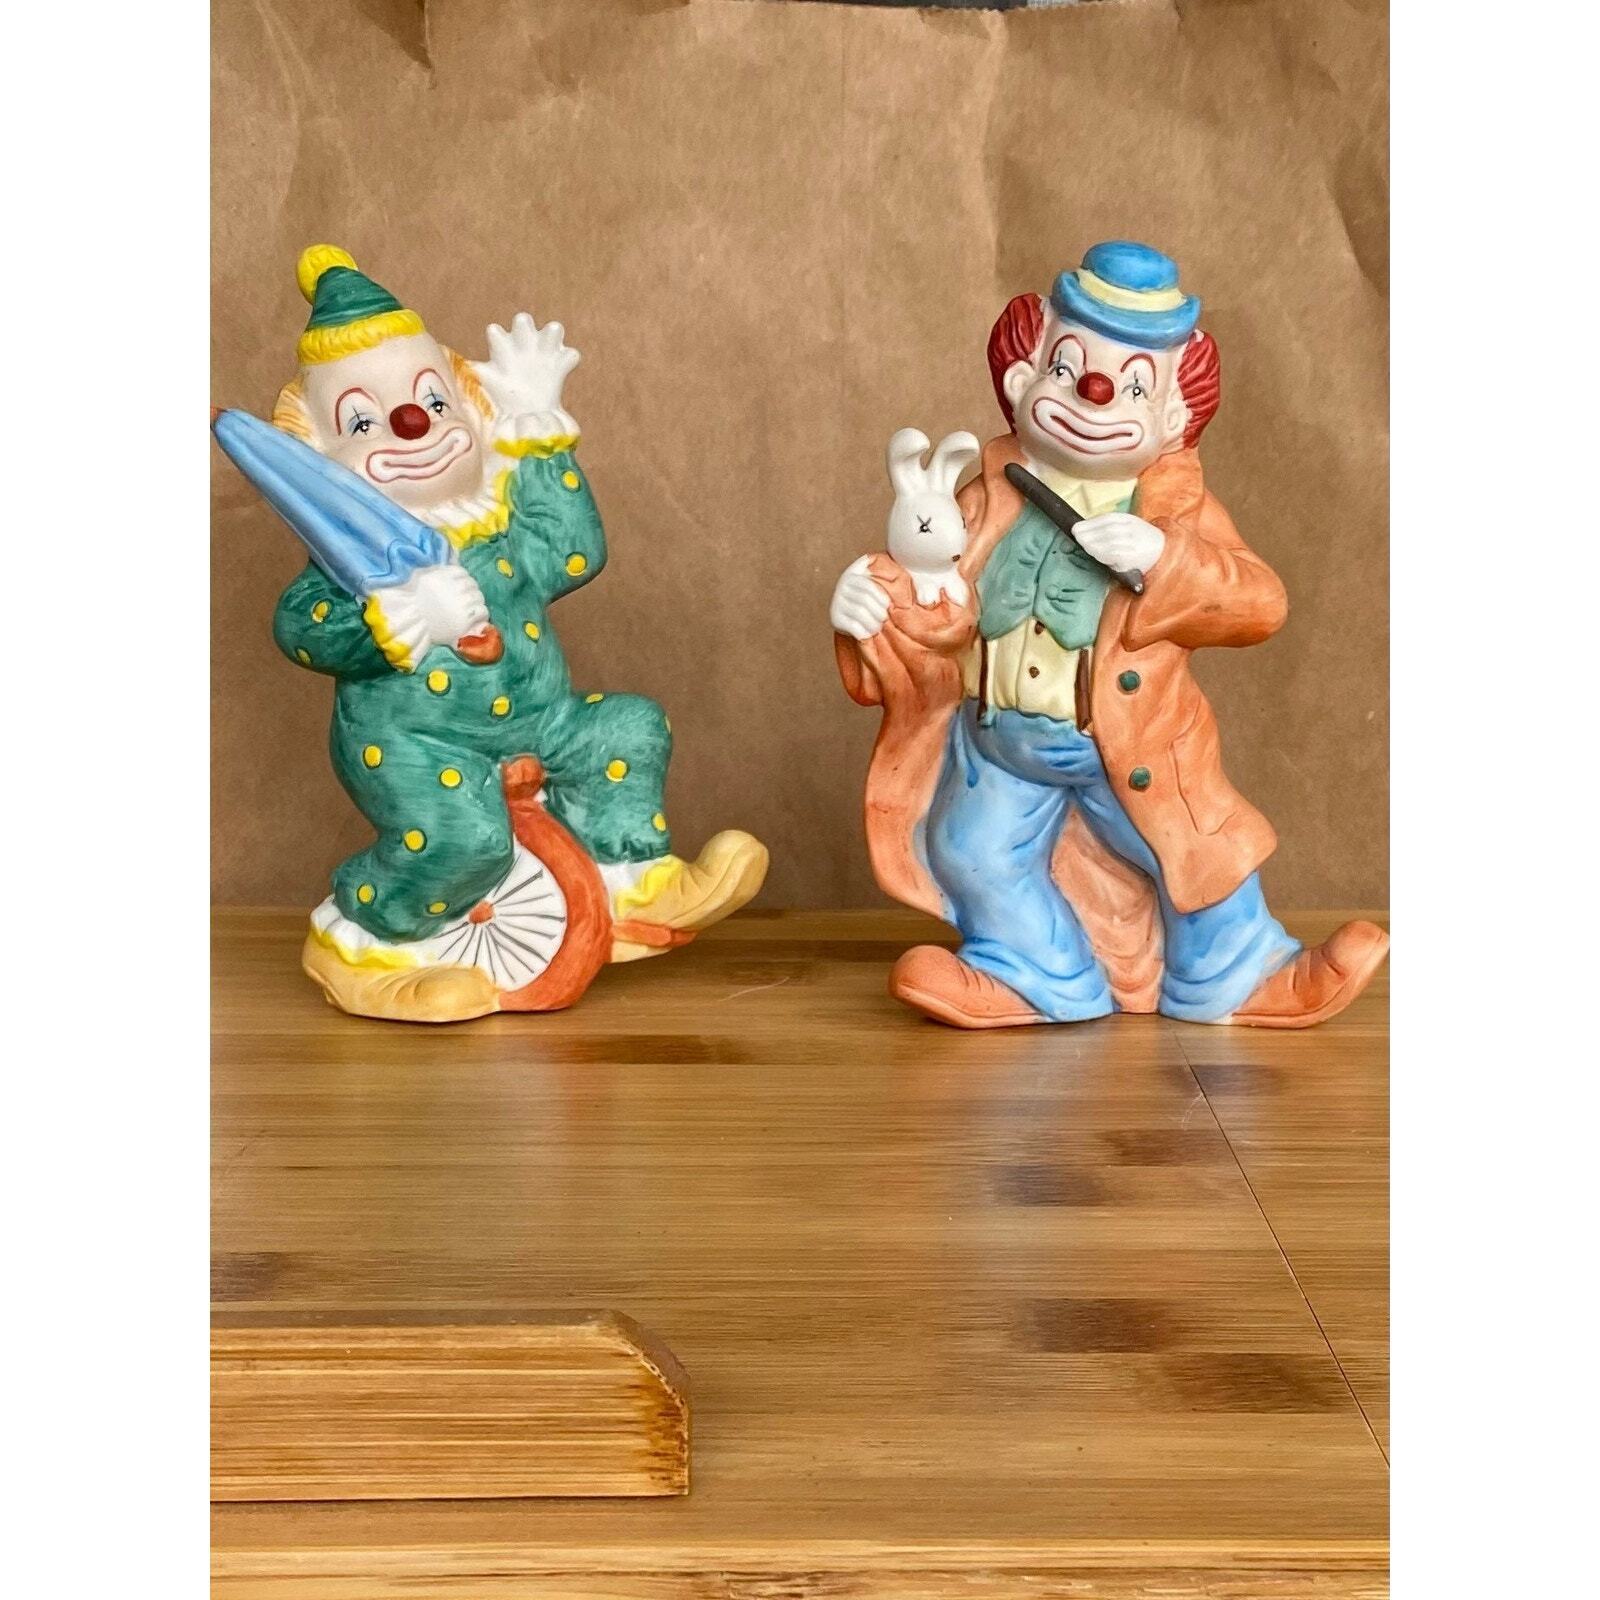 Vintage 1986 Enesco Porcelain Clown Figurines - Set of 2